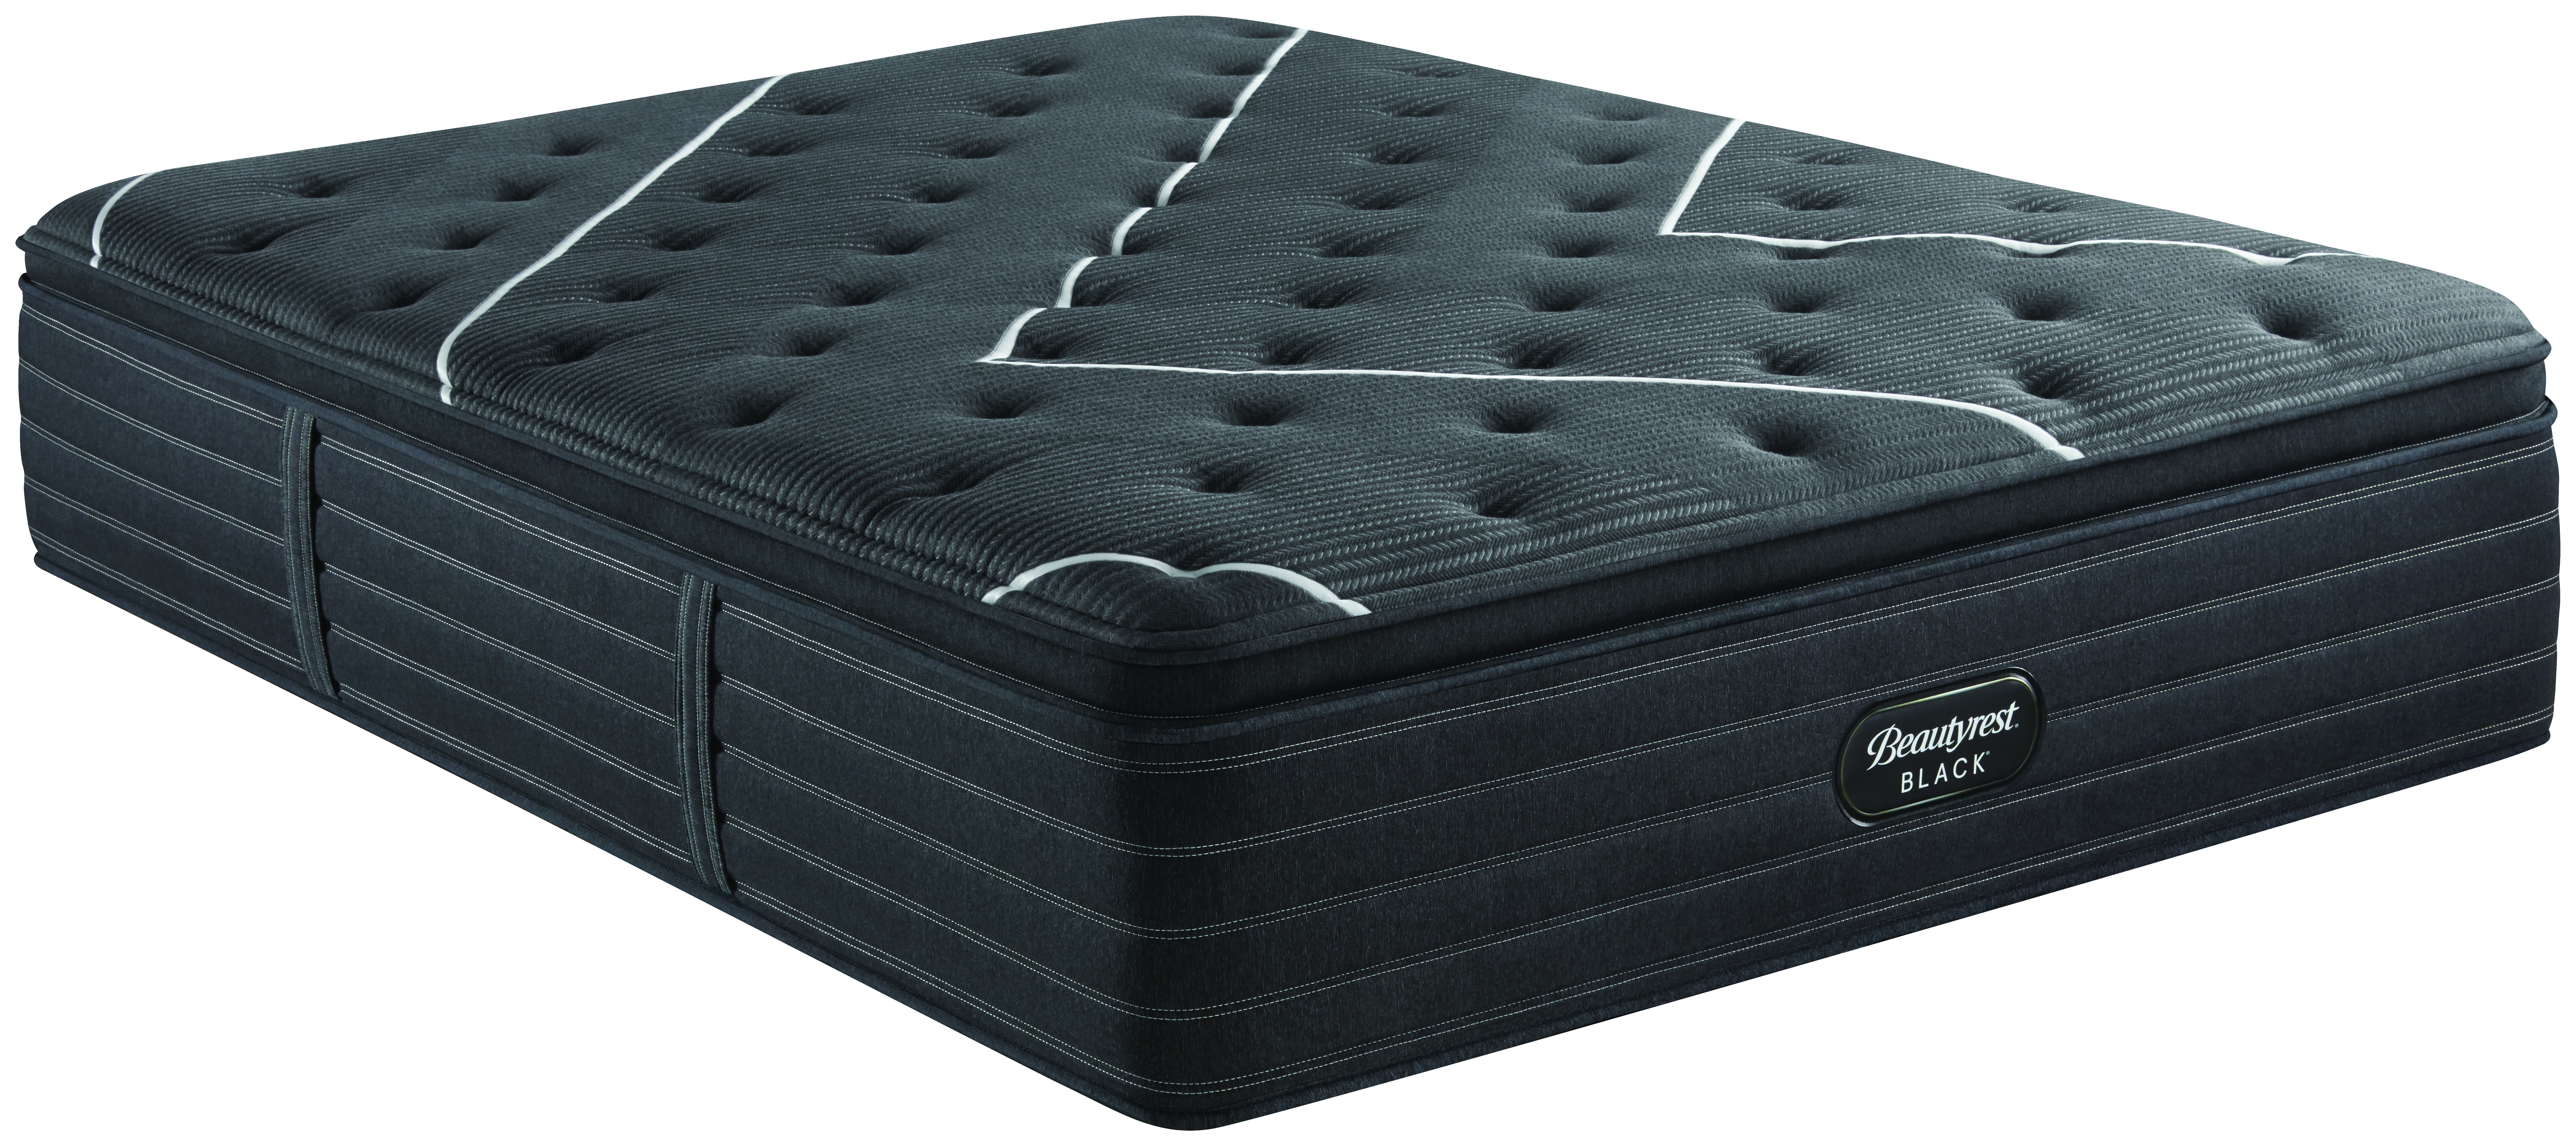 product image of Beautyrest Black 700810021-1050 mattress